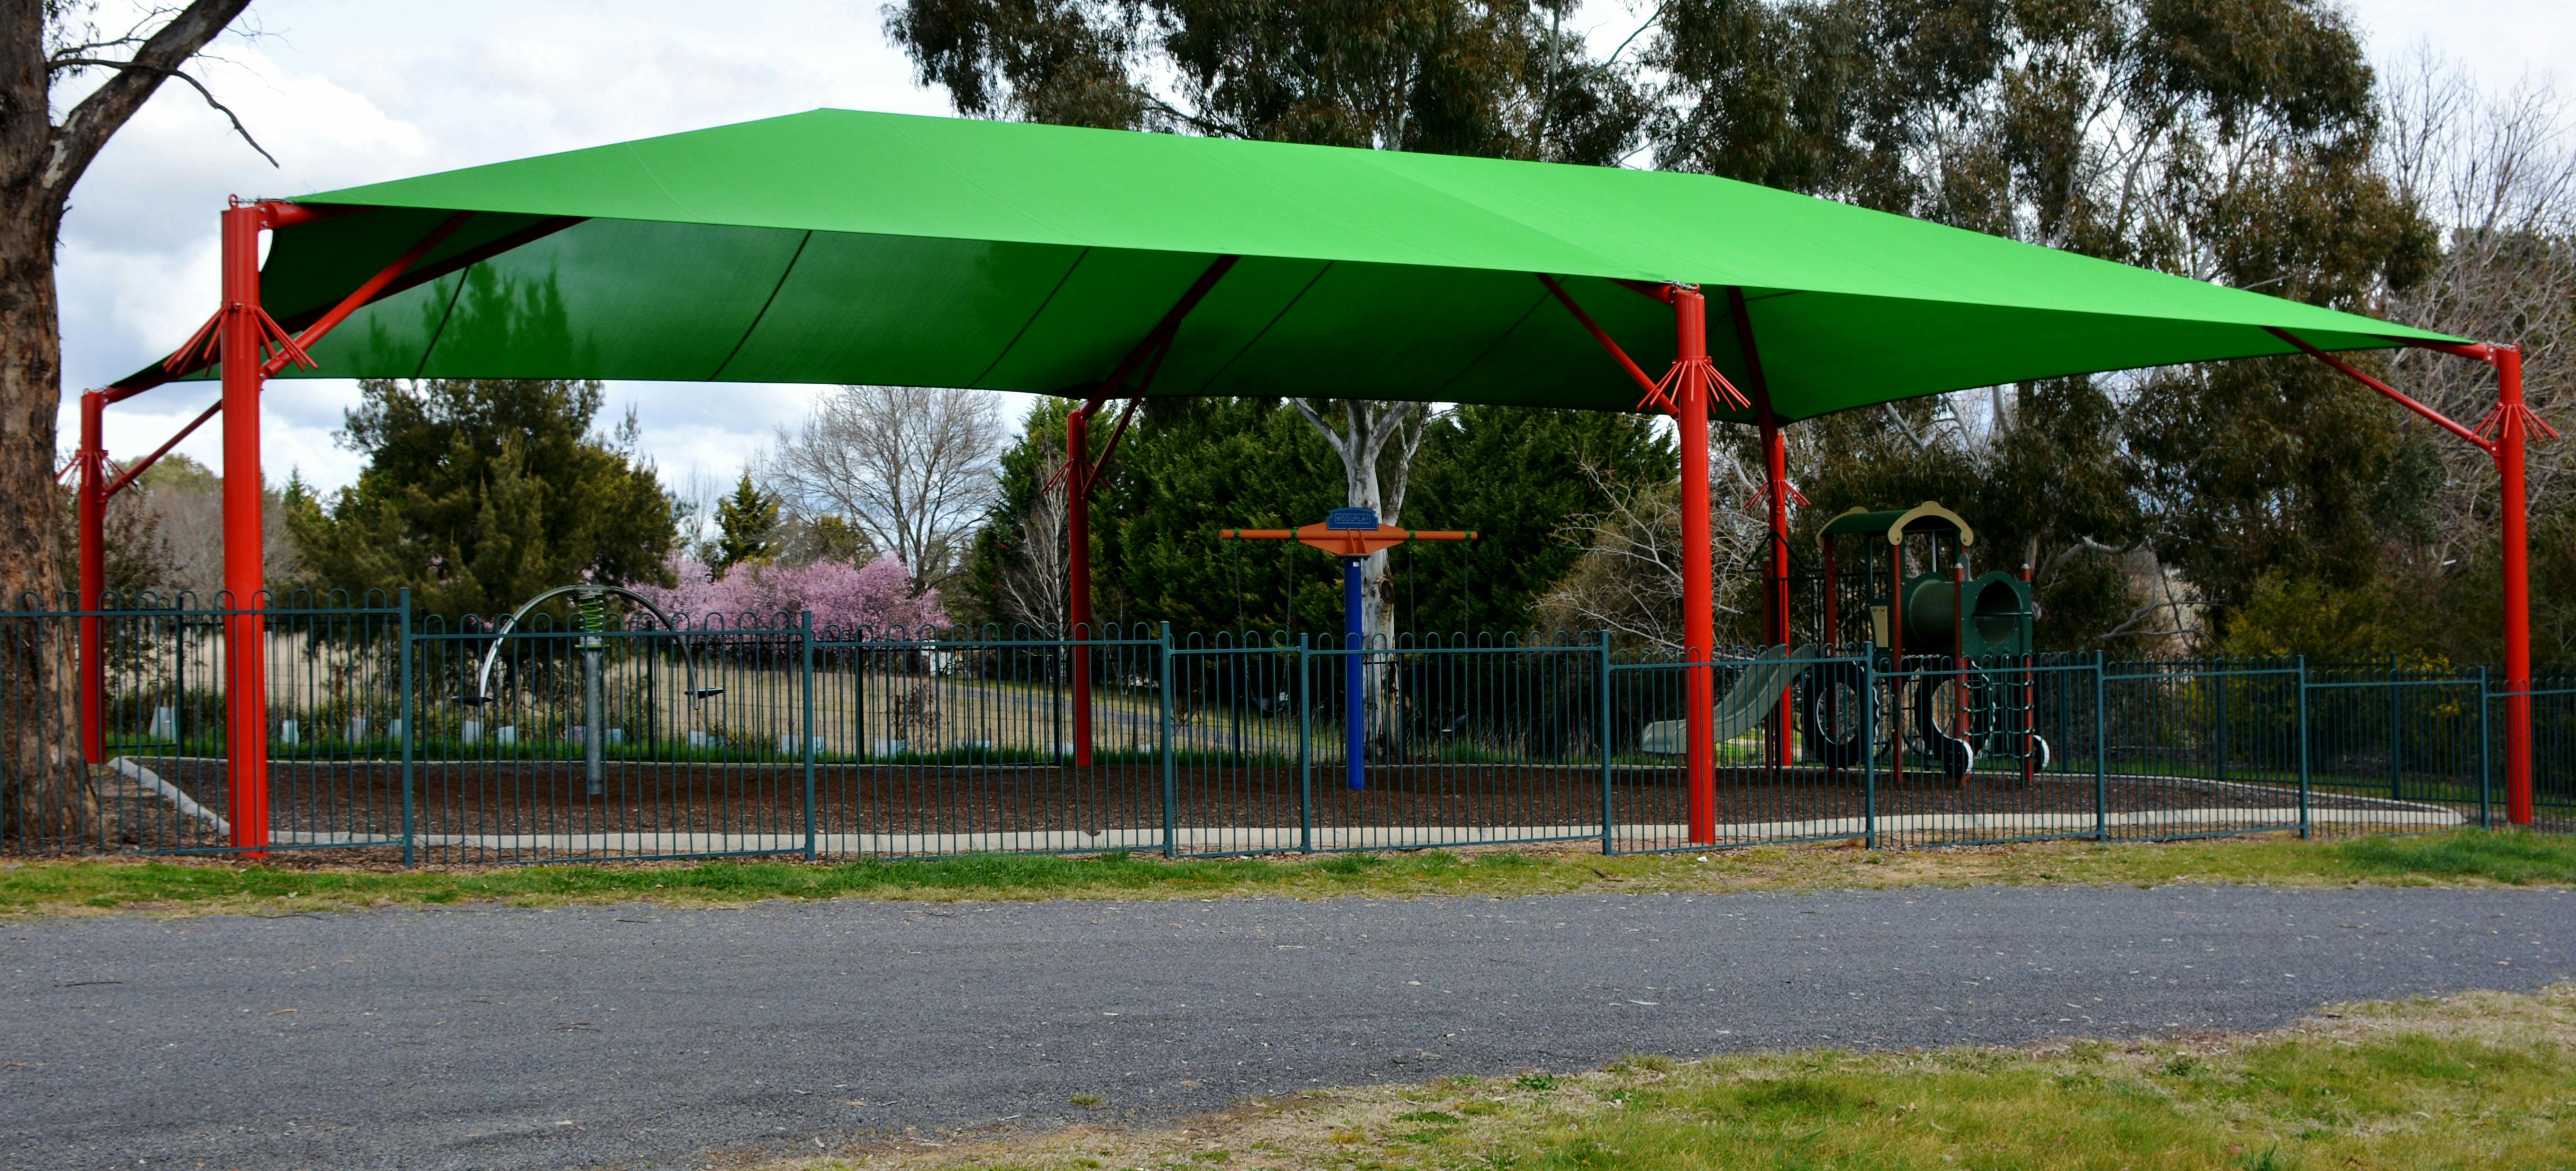 Clifton Grove Playground